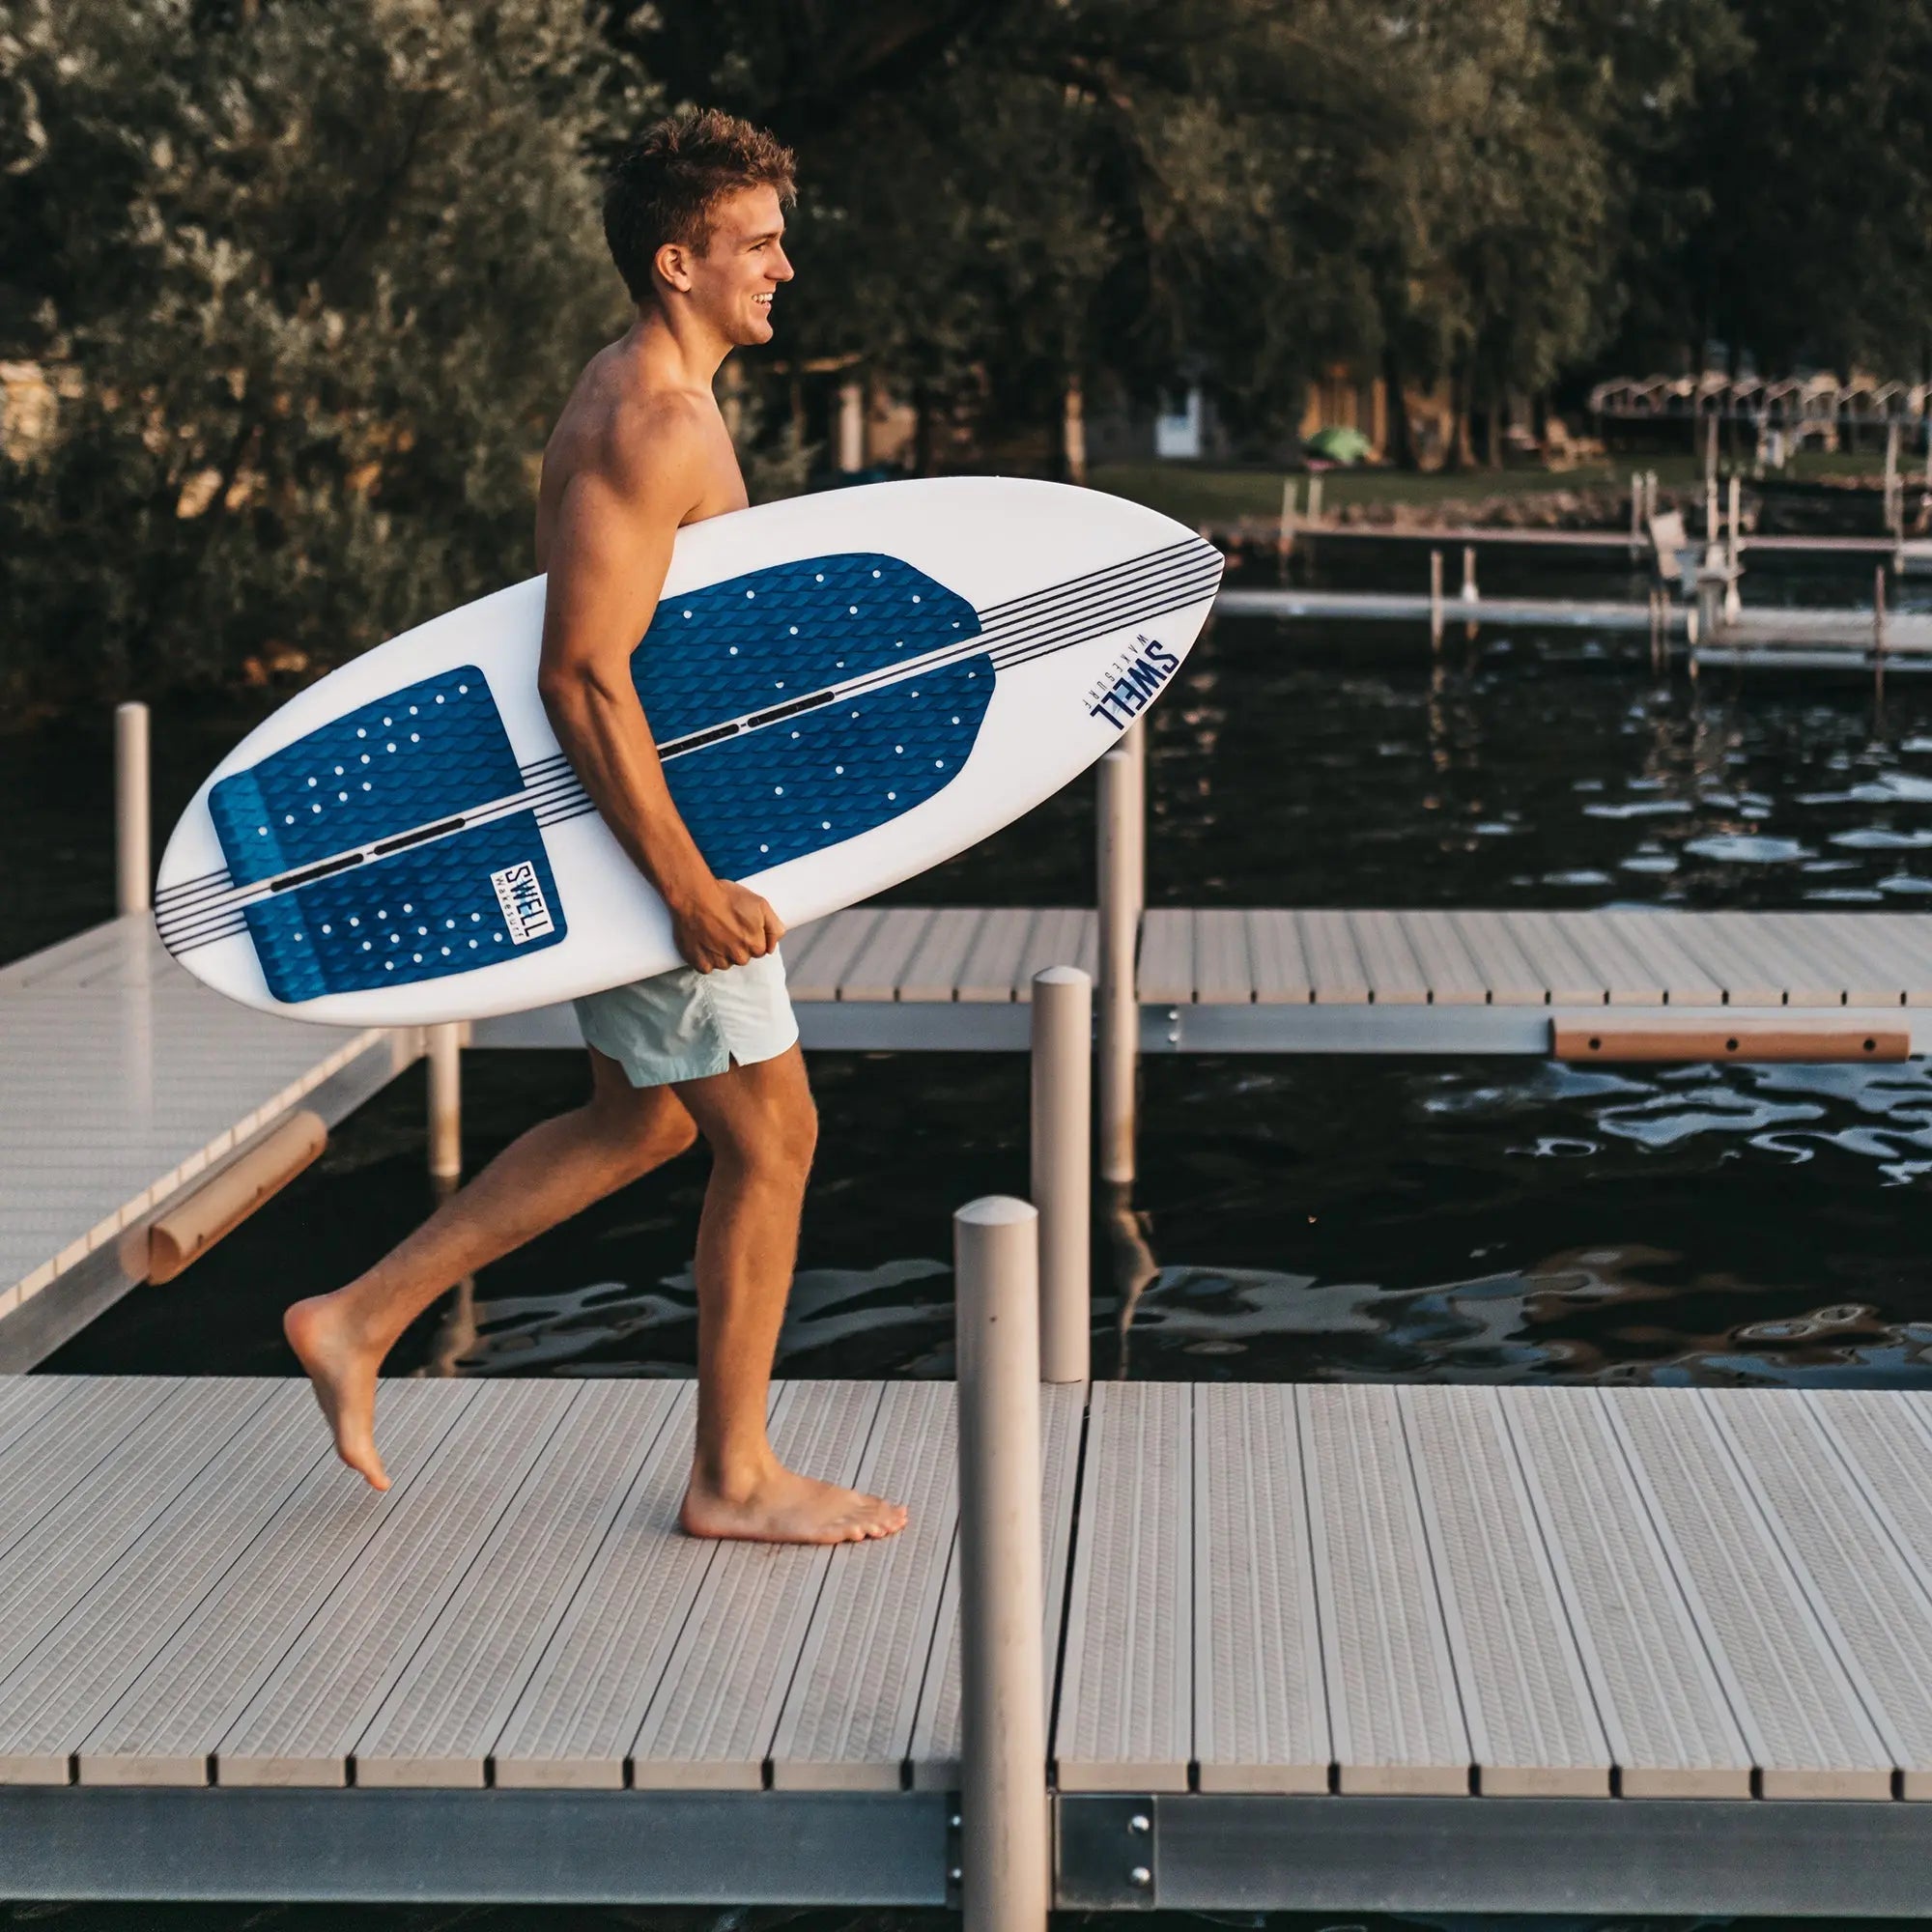 SWELL Wakesurf - Tonka Skim Surfboard - Handmade in The USA - Board ONLY SWELL Wakesurf